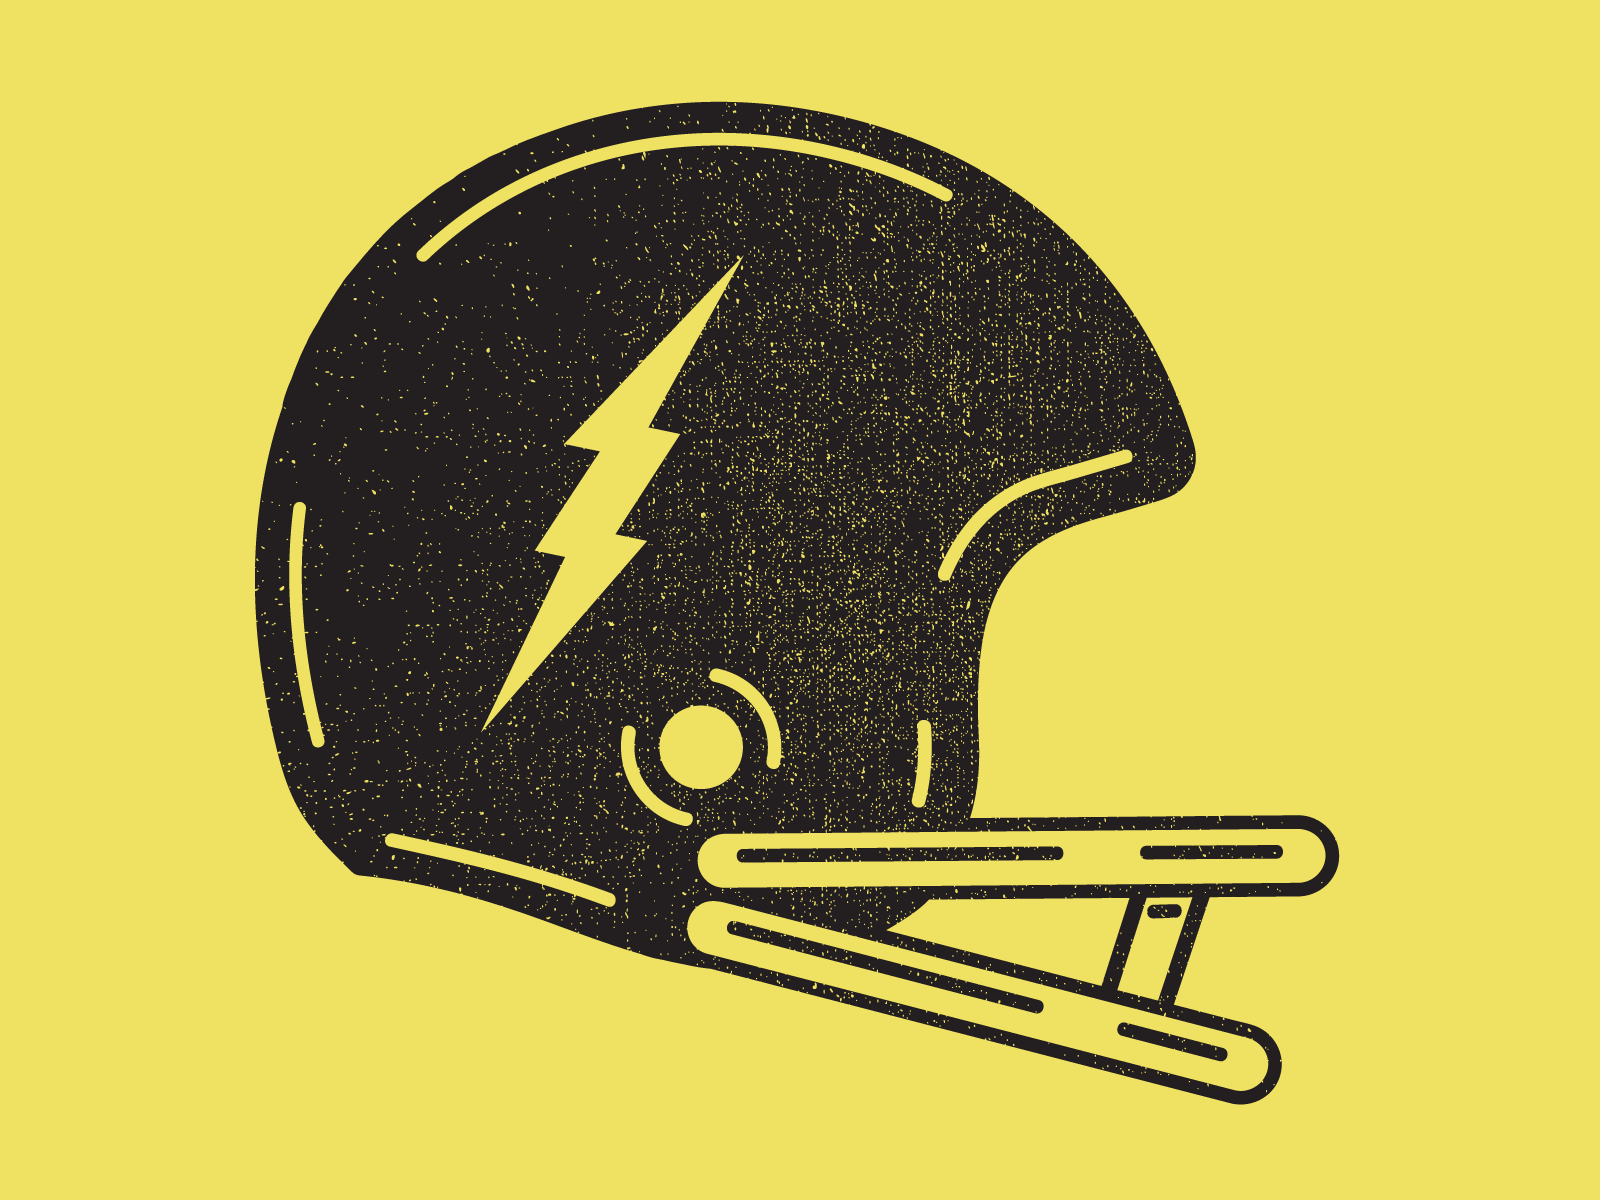 Football Helmet Illustration - Tony Headrick